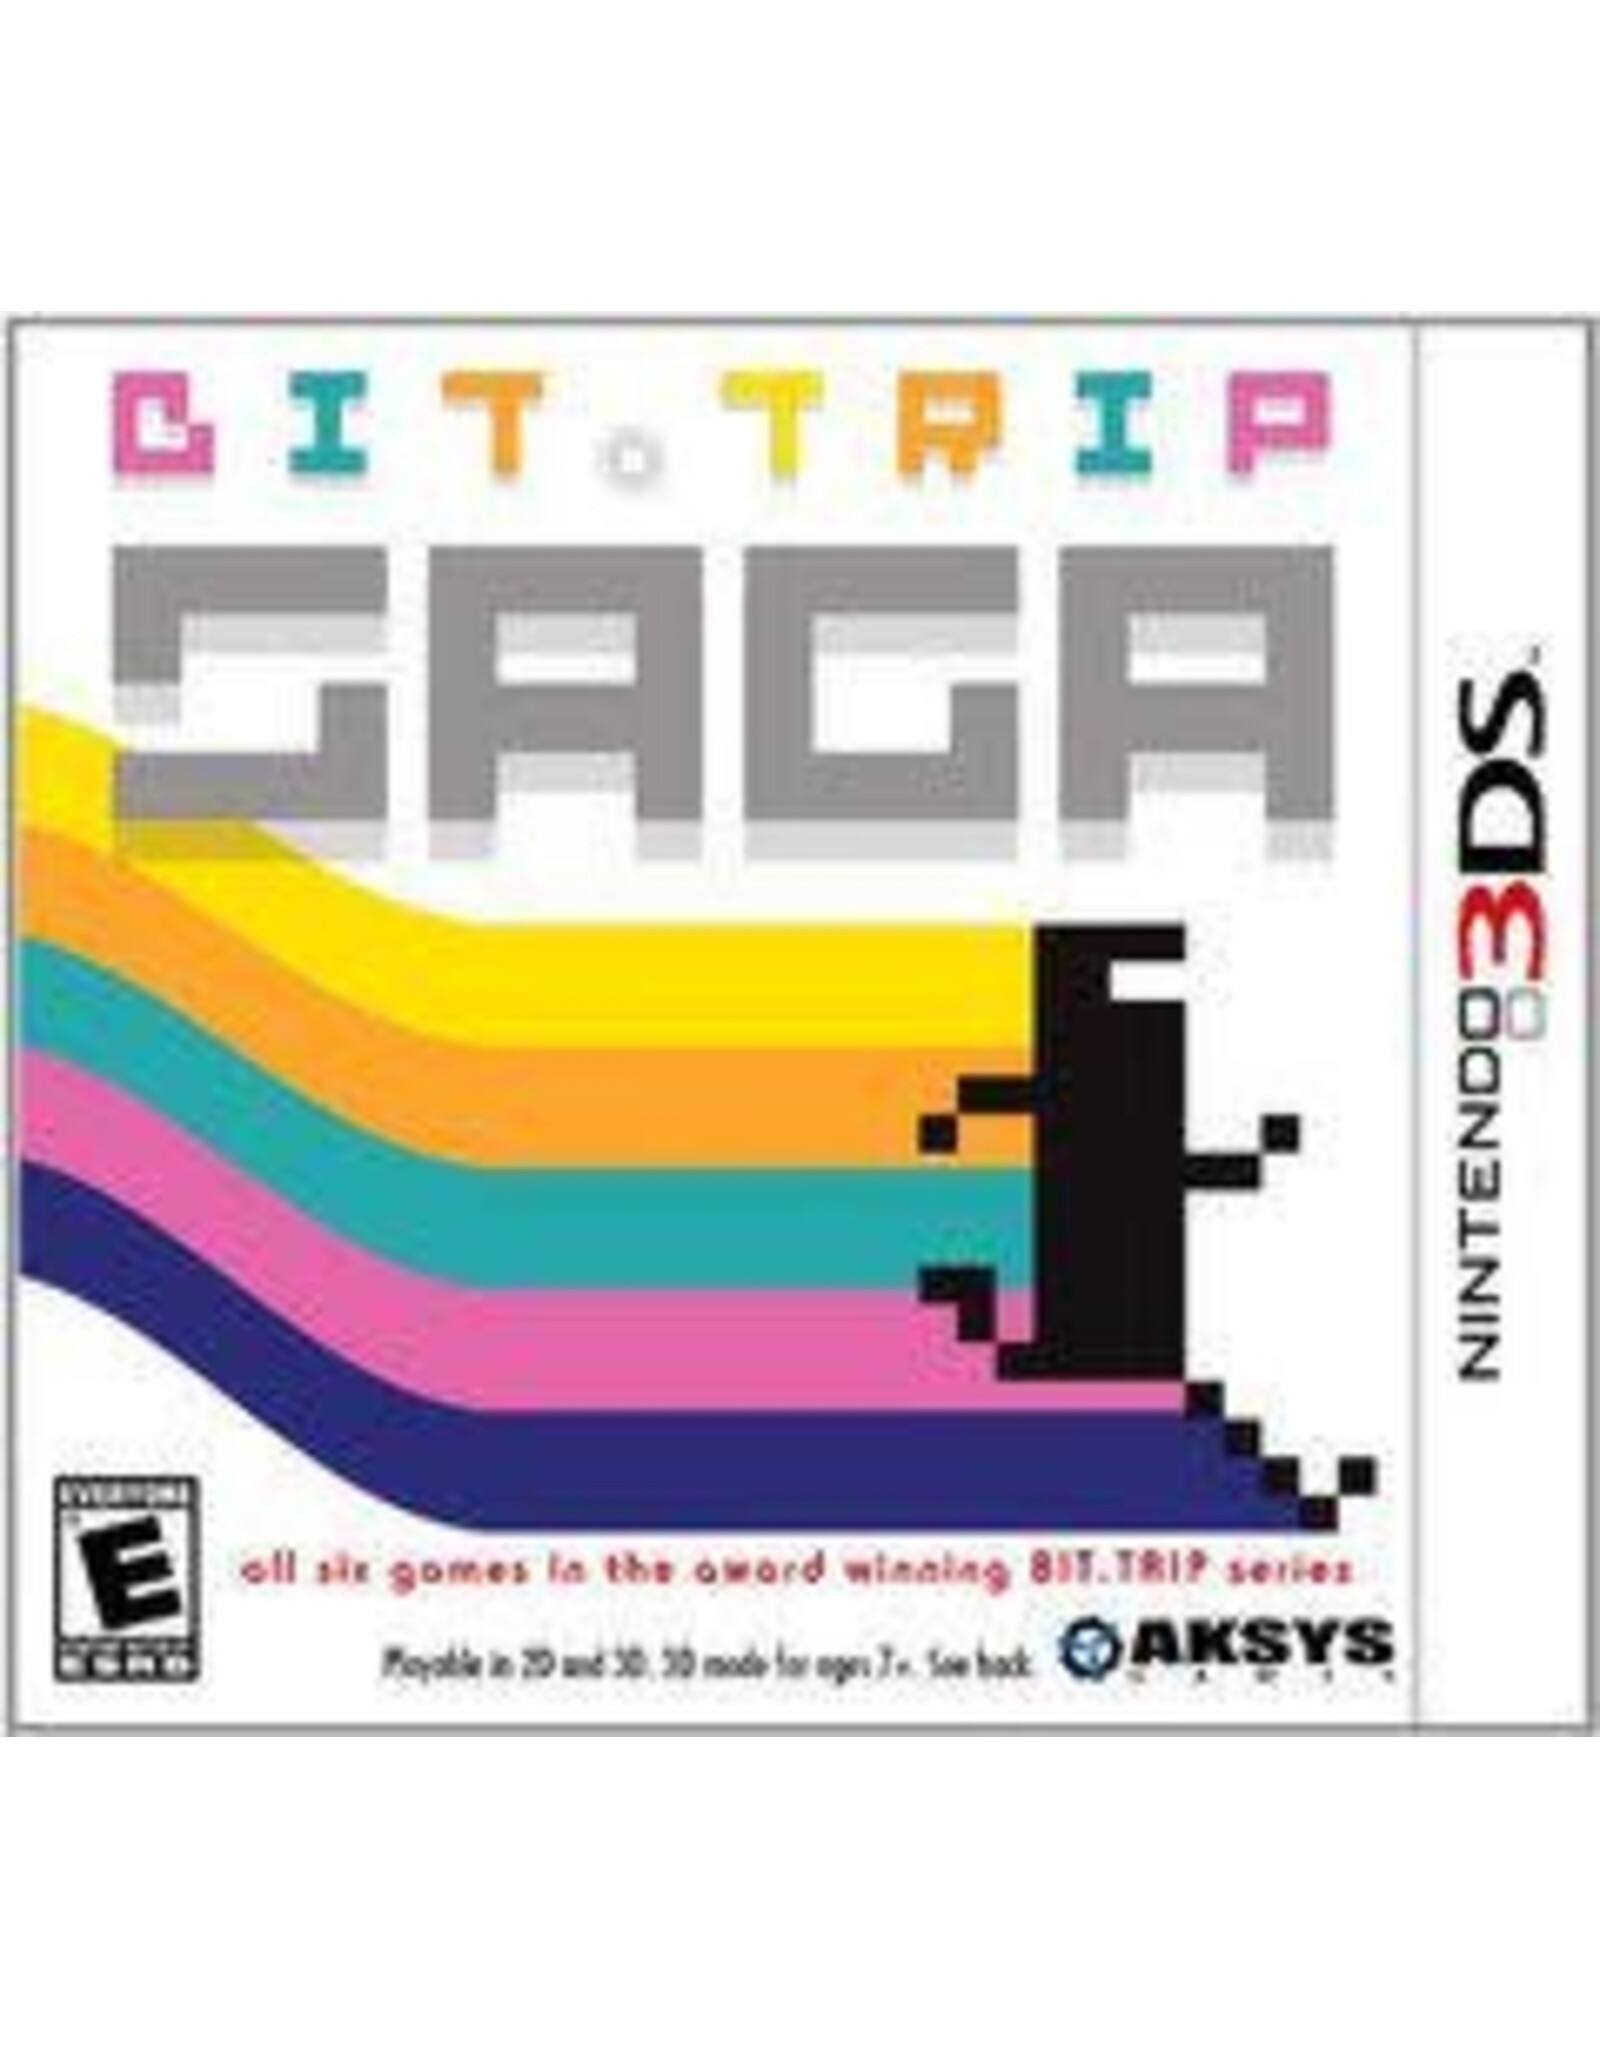 Nintendo 3DS Bit.Trip Saga (Brand New!)